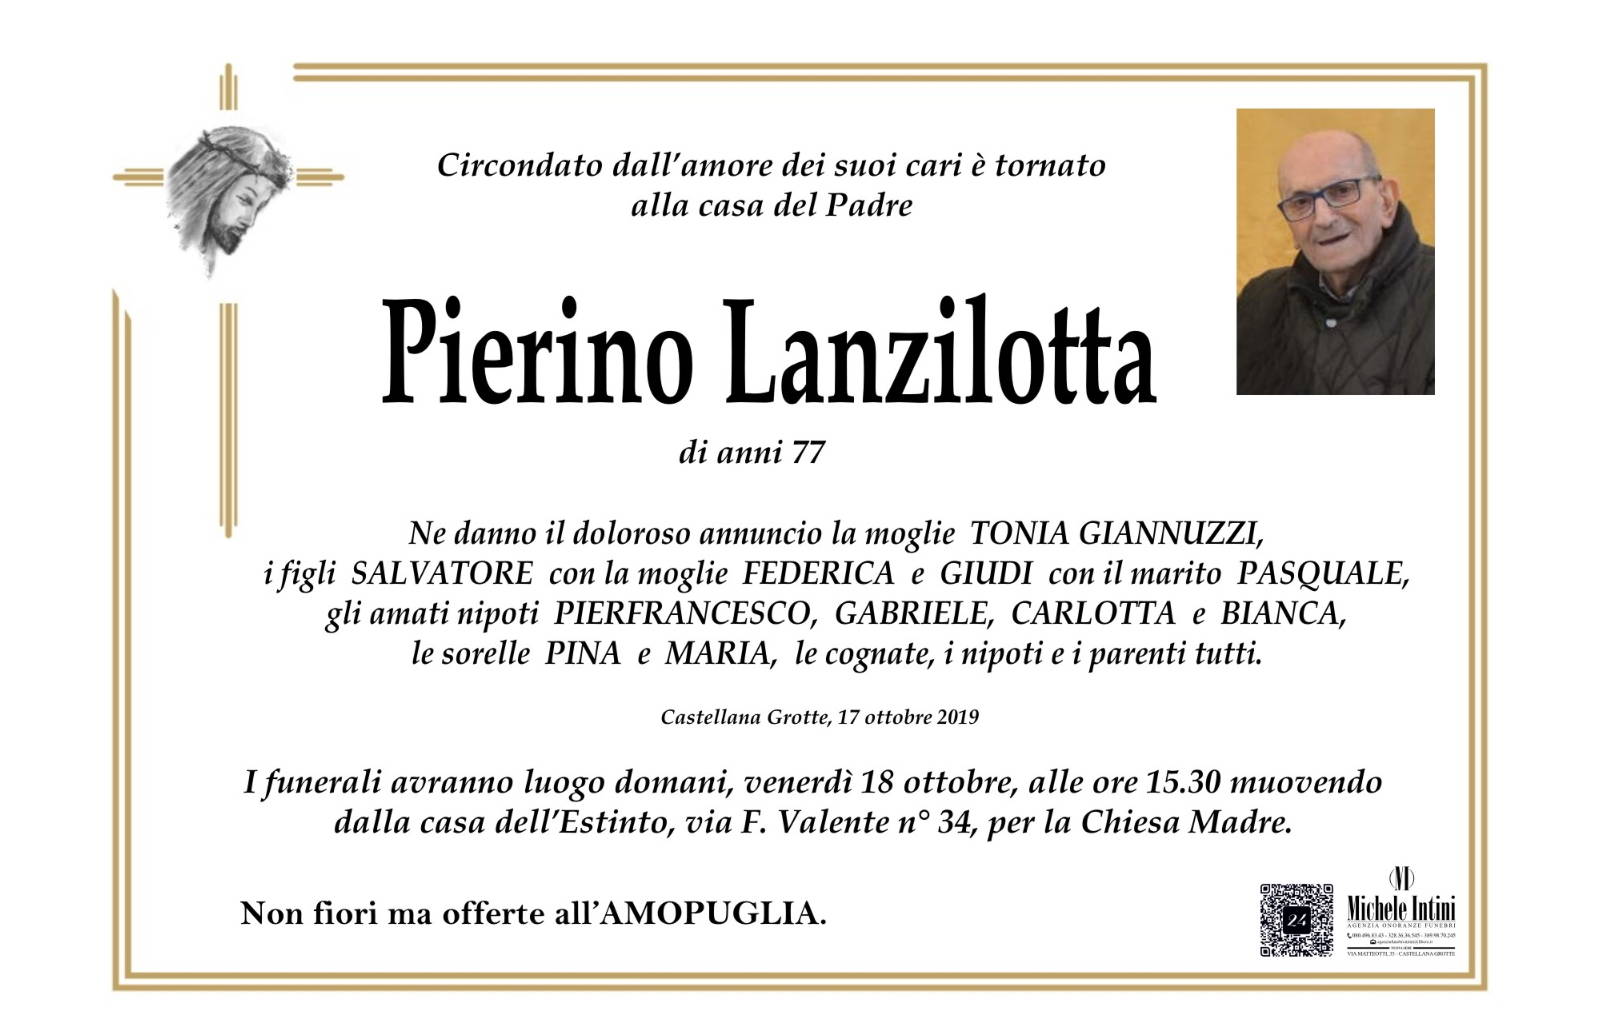 Pierino Lanzilotta